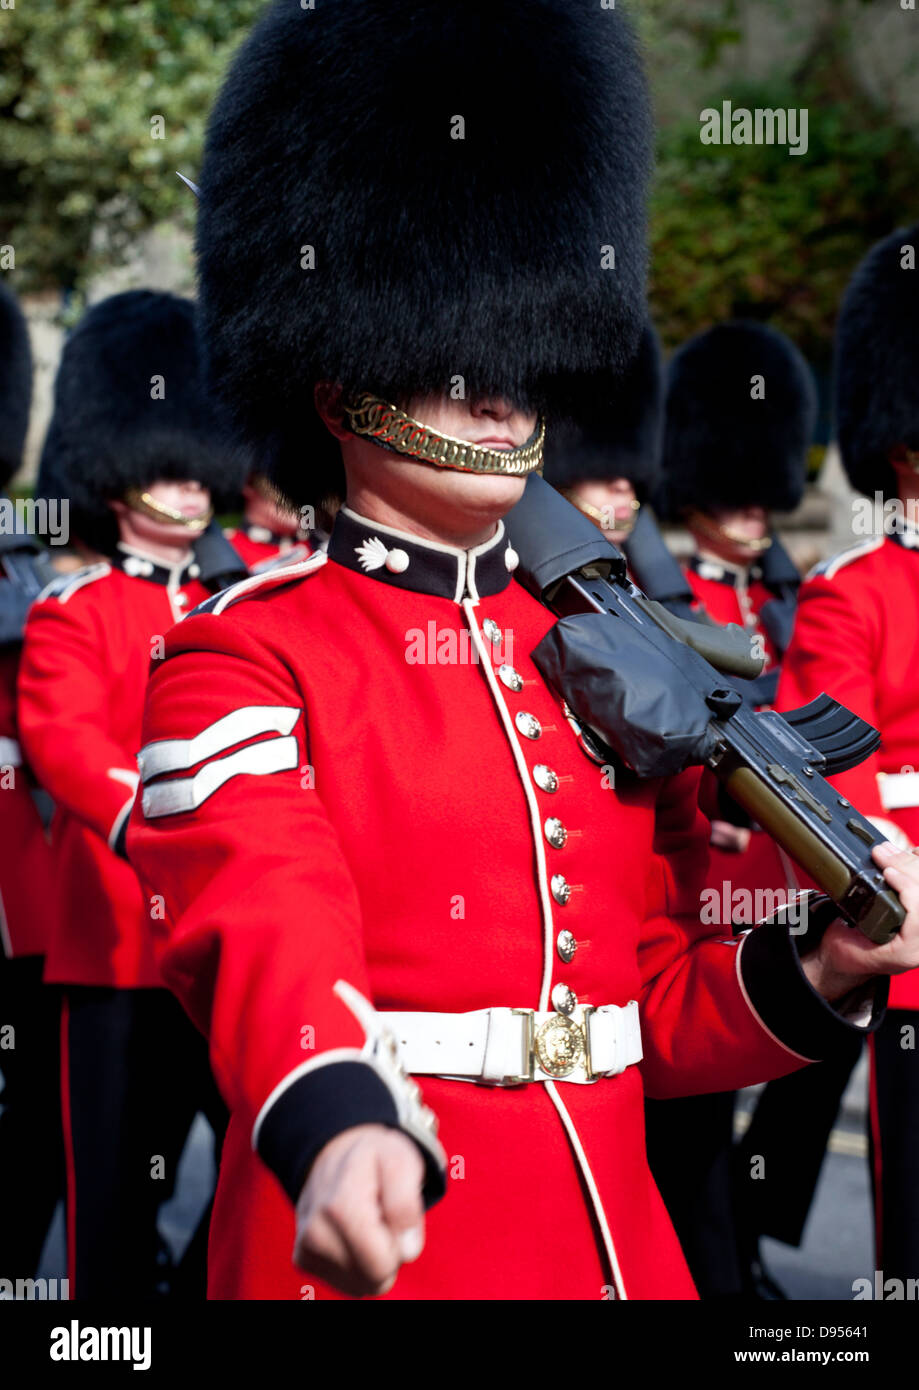 Royal guards marching, England UK Stock Photo